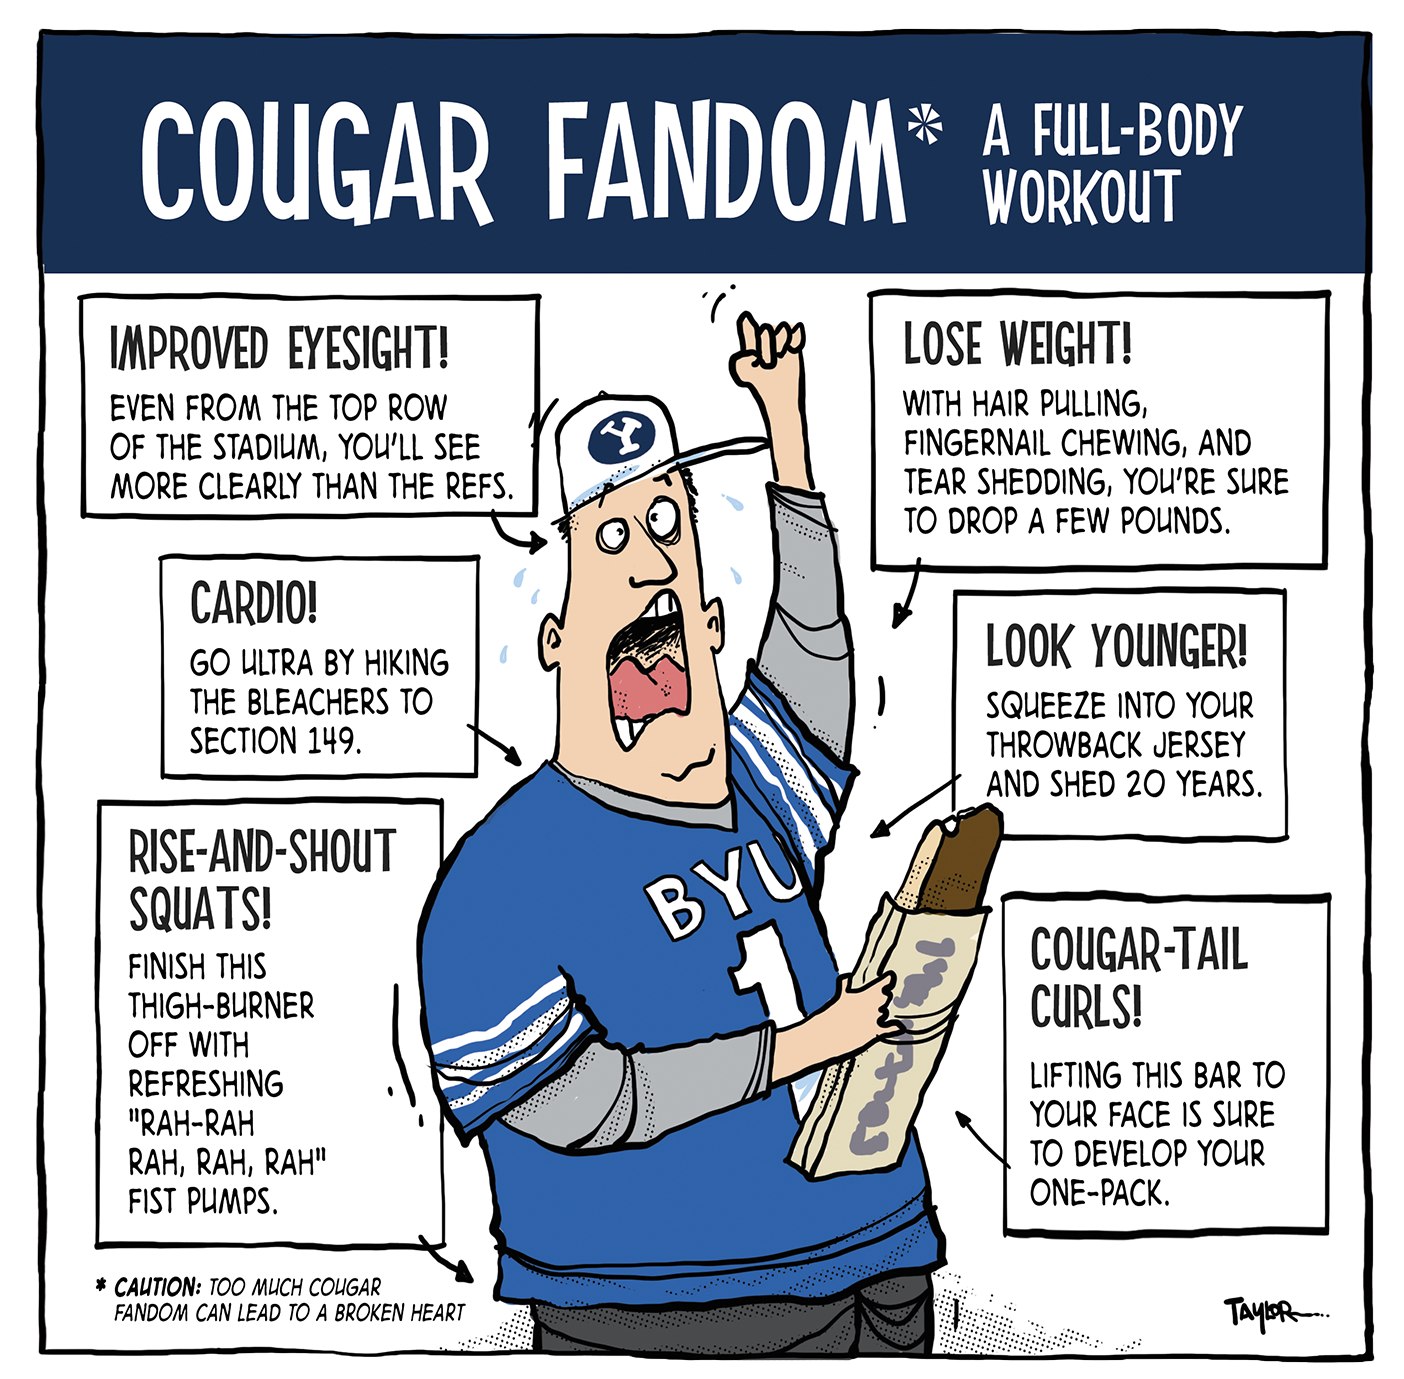 A cartoon comic describing aspects of the Cougar Fandom workout.